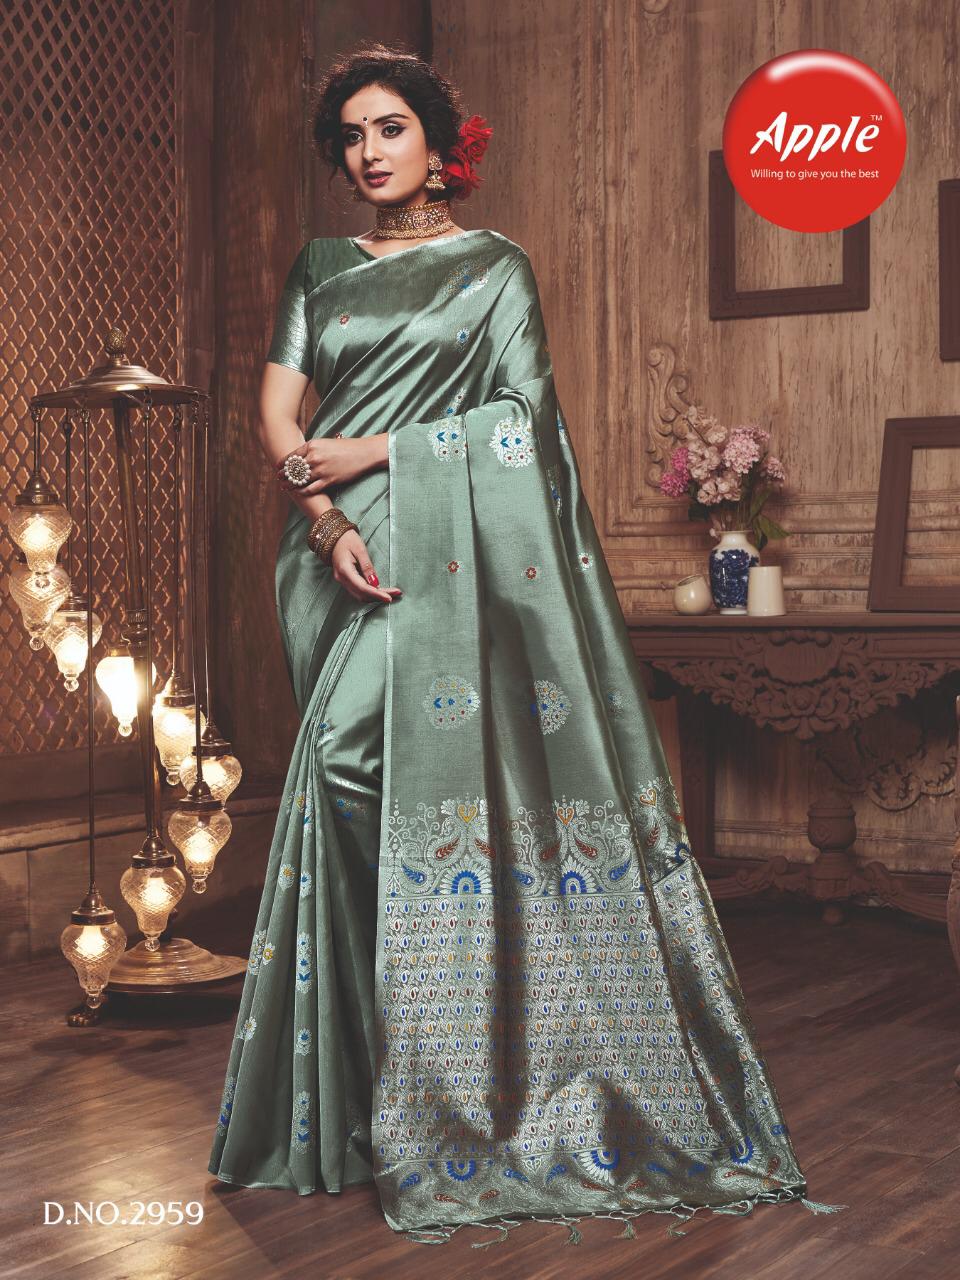 Apple Ghoomar vol 2 beautiful silk sarees collection